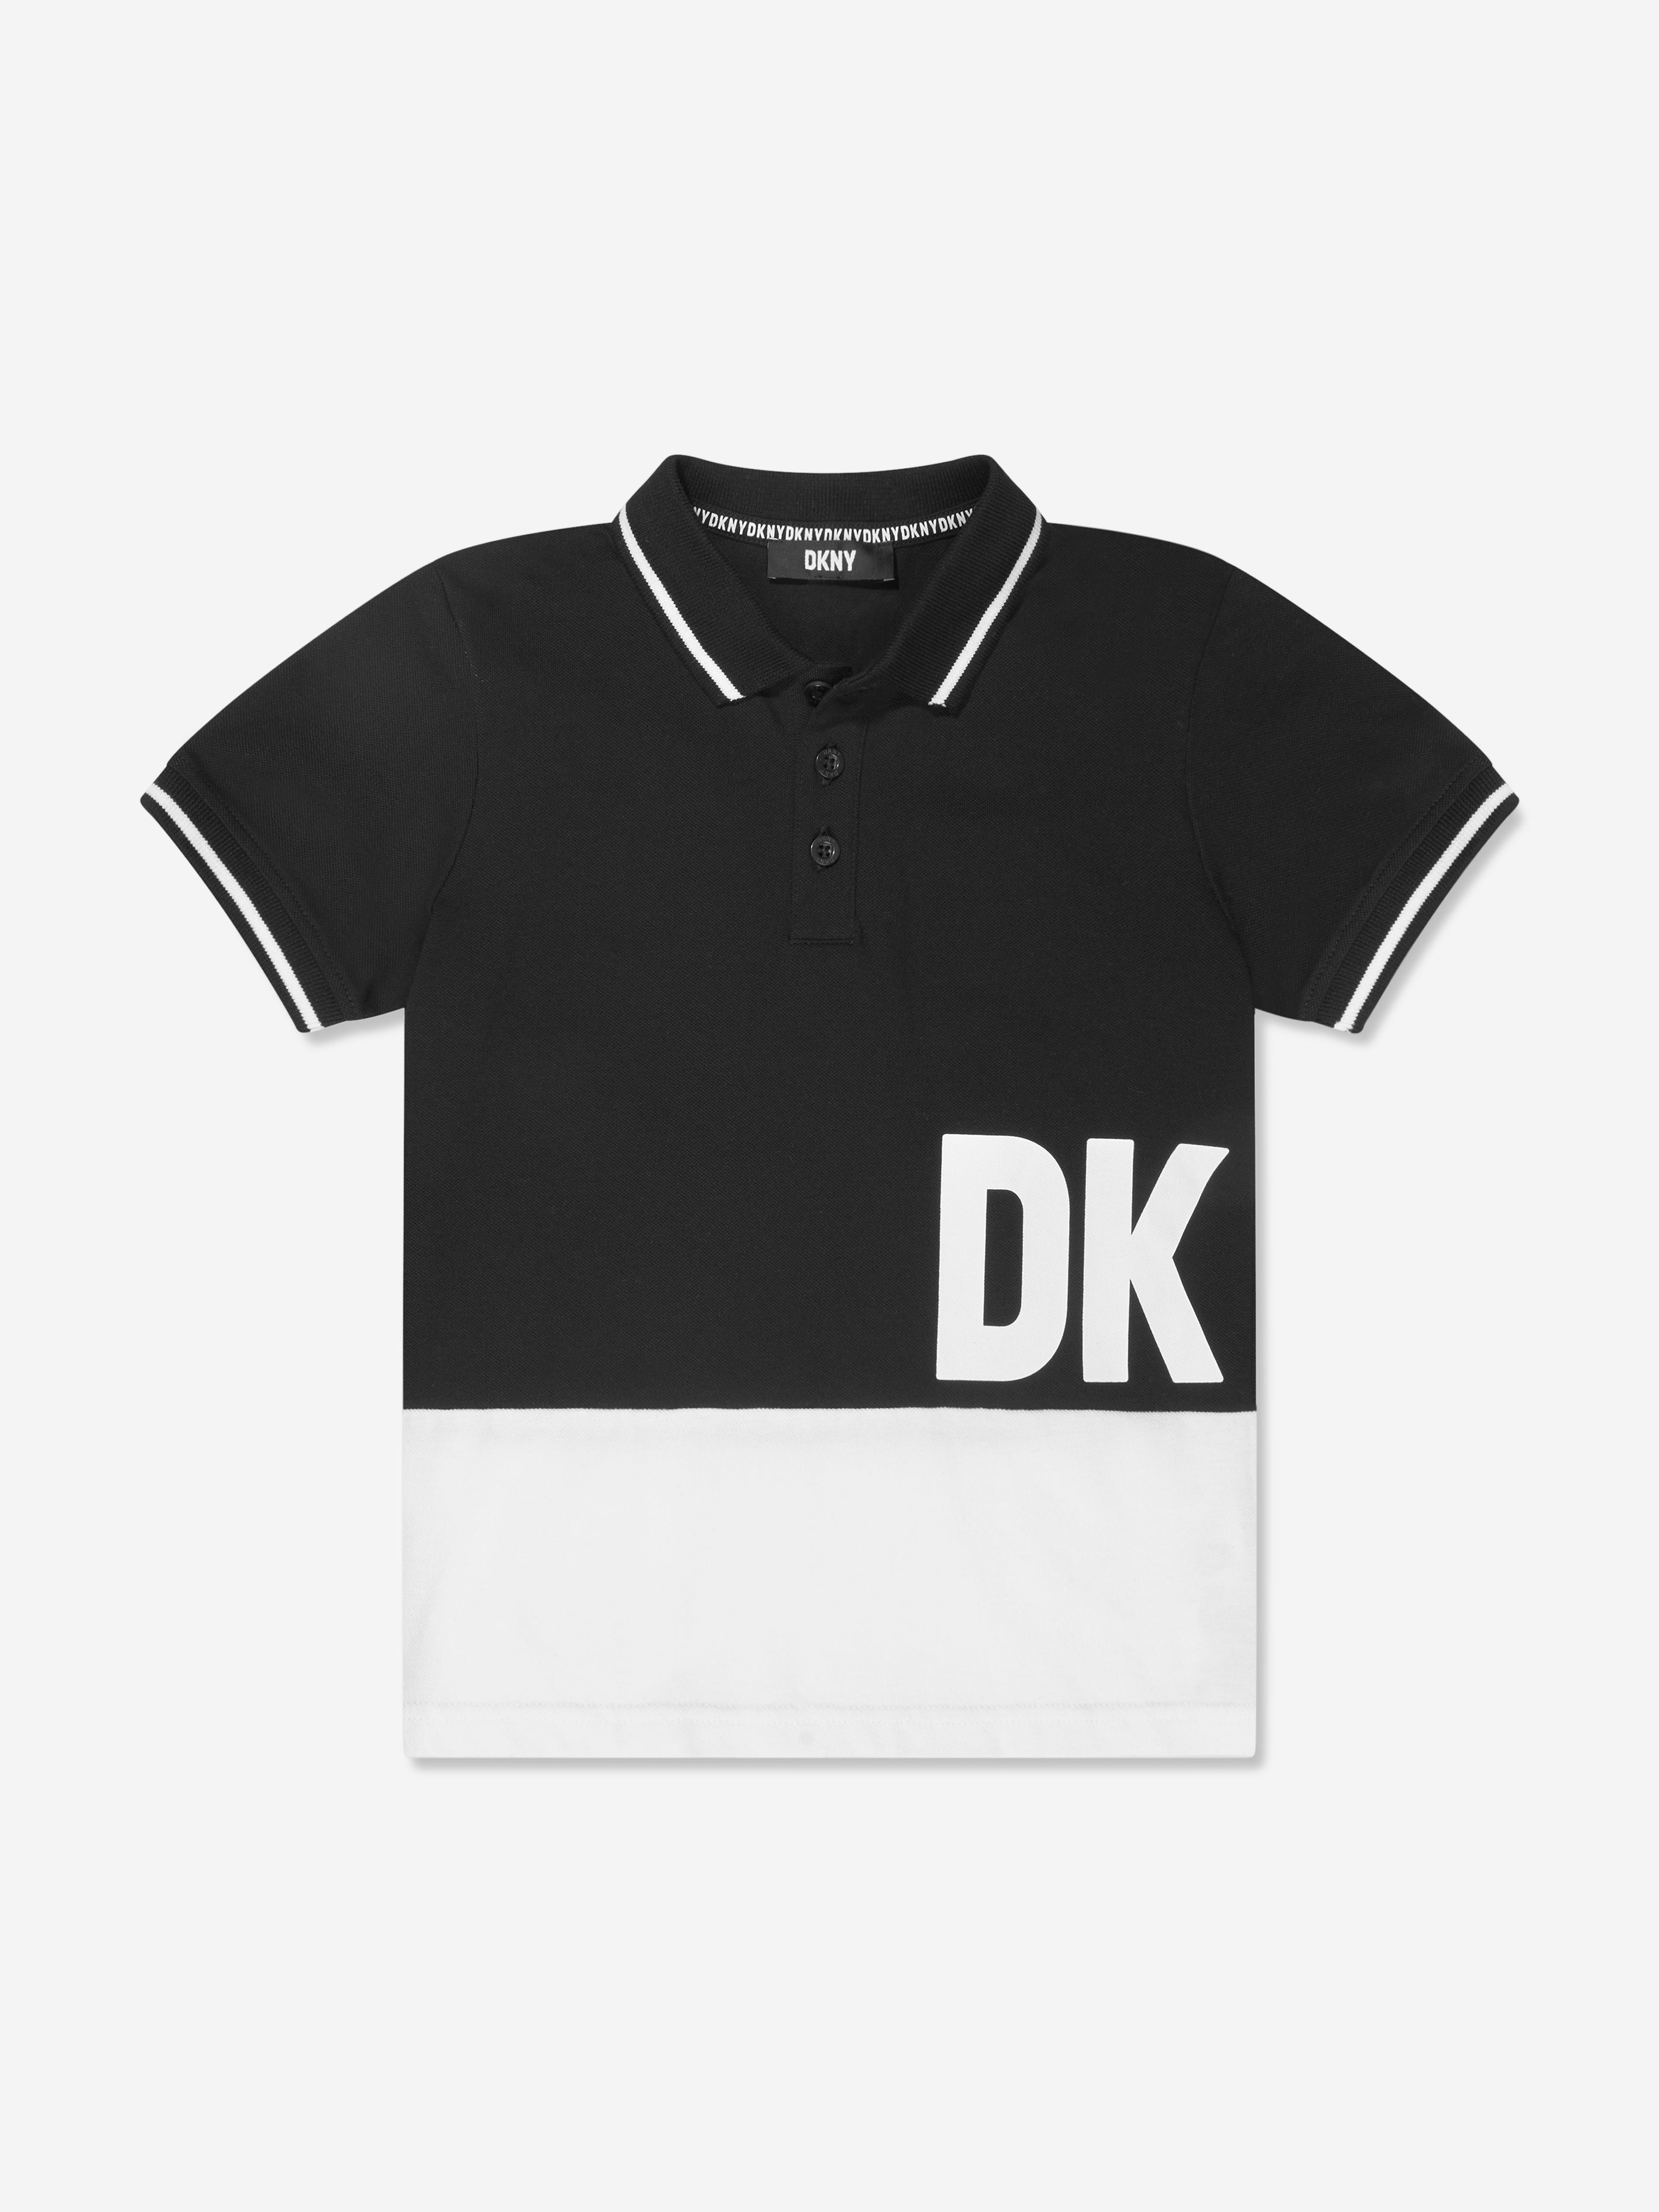 DKNY kids Long Sleeve T-shirt